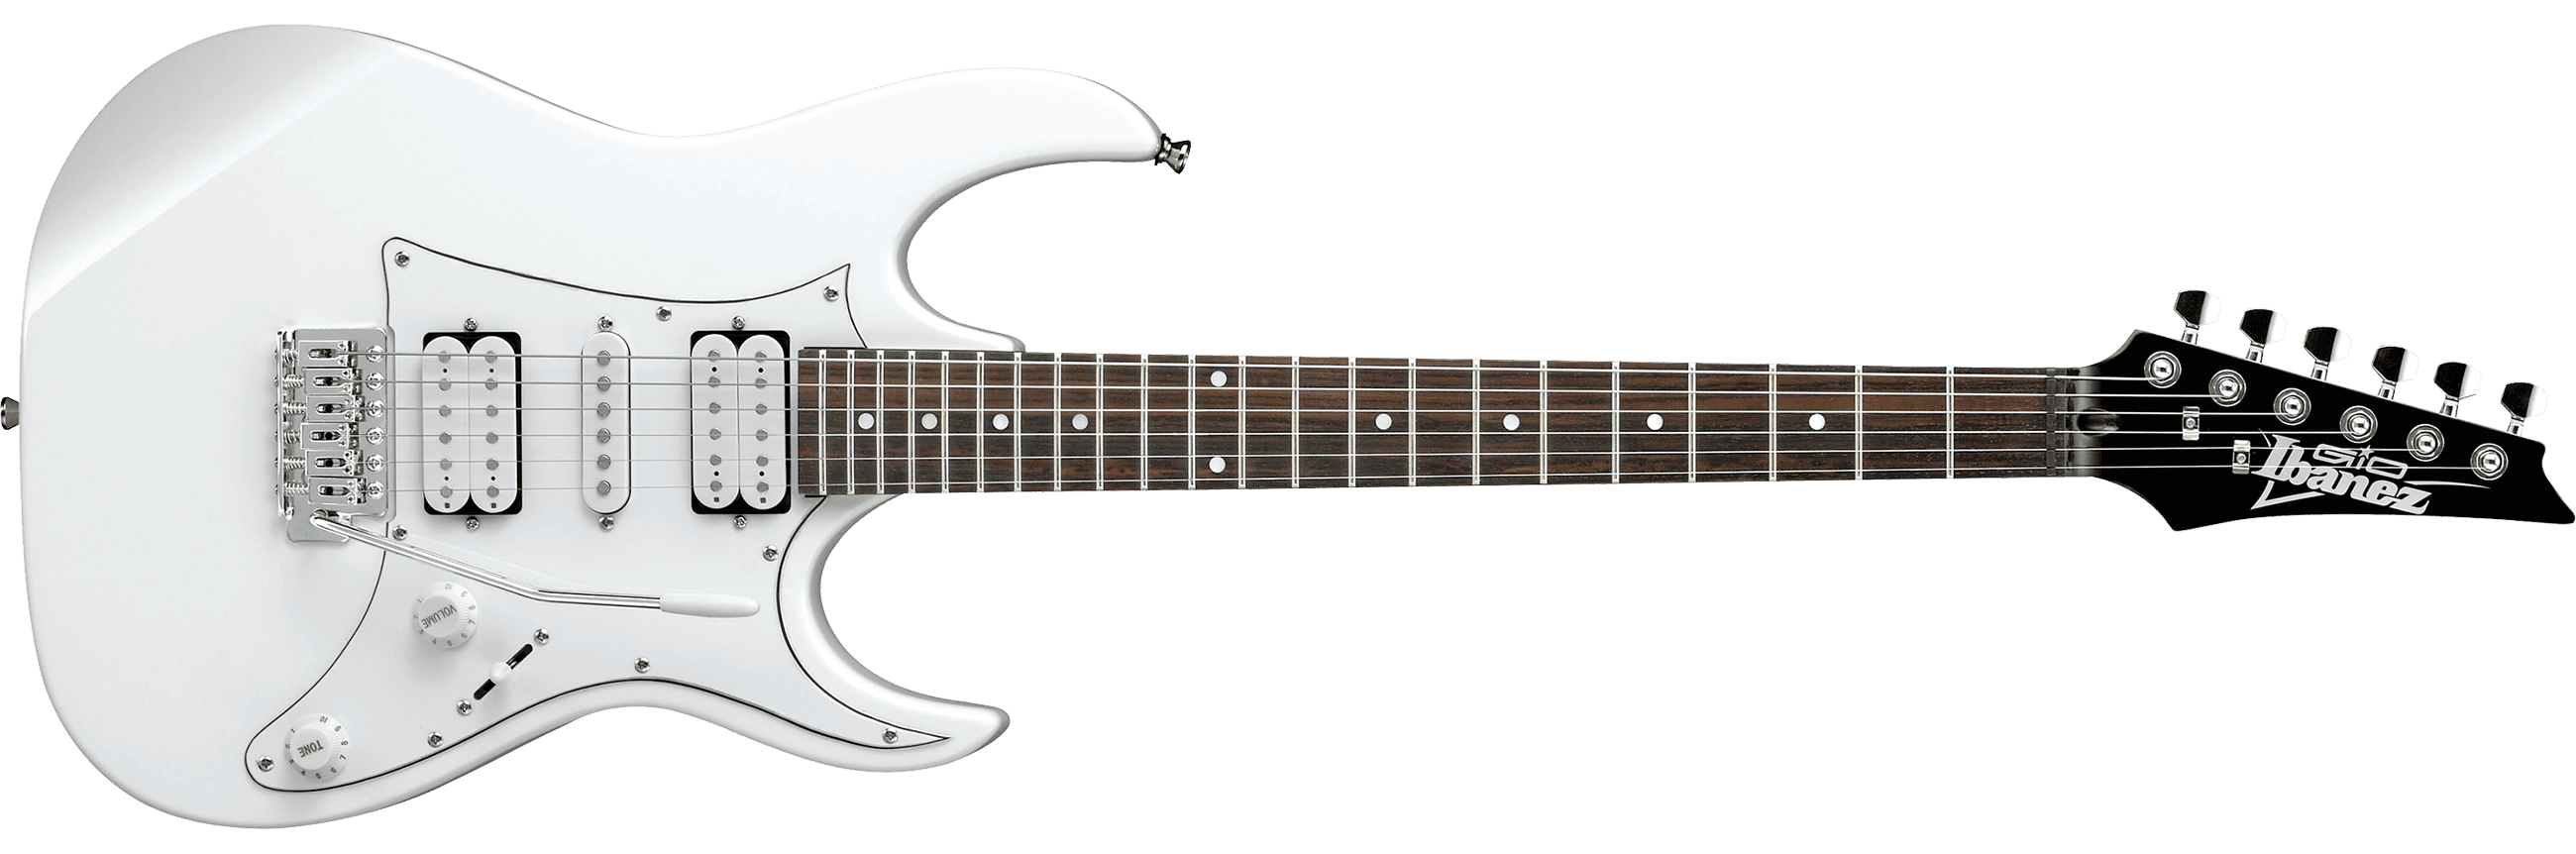 Ibañez - Guitarra Eléctrica RG, Color: Blanca Mod.GRX50-WH_286